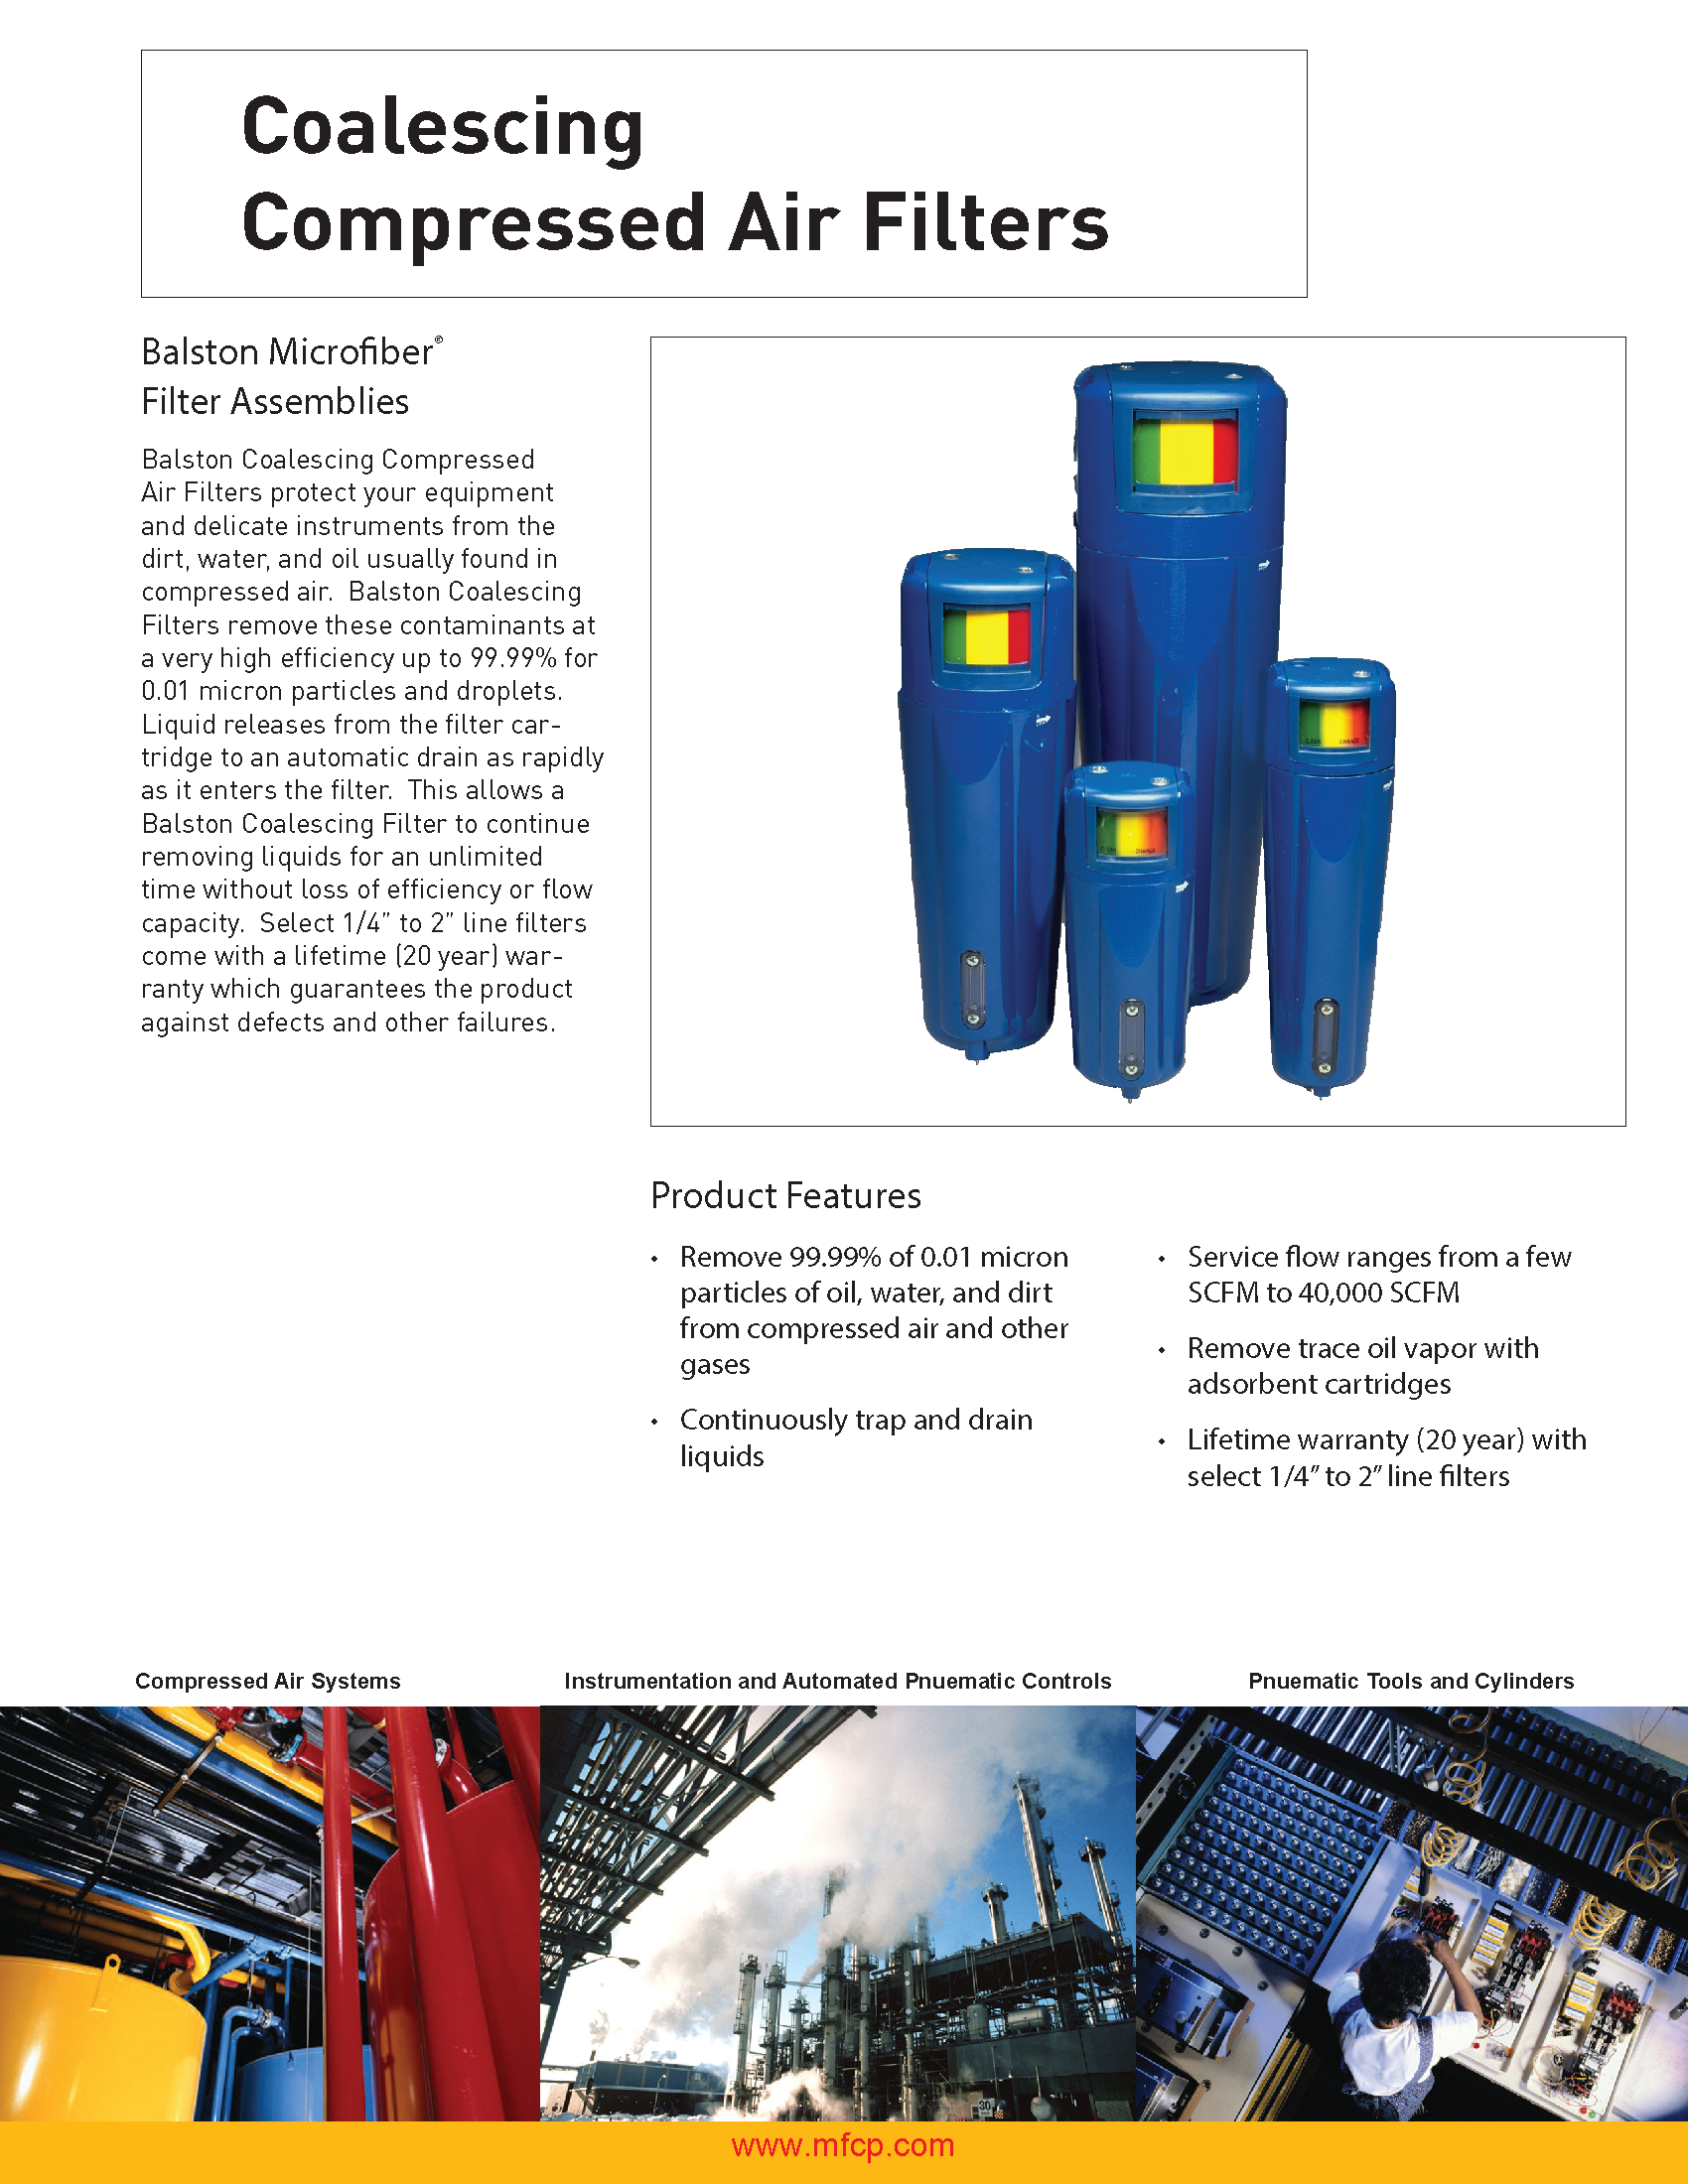 Parker Balston Coalescing CompressedAir & Gas Filters